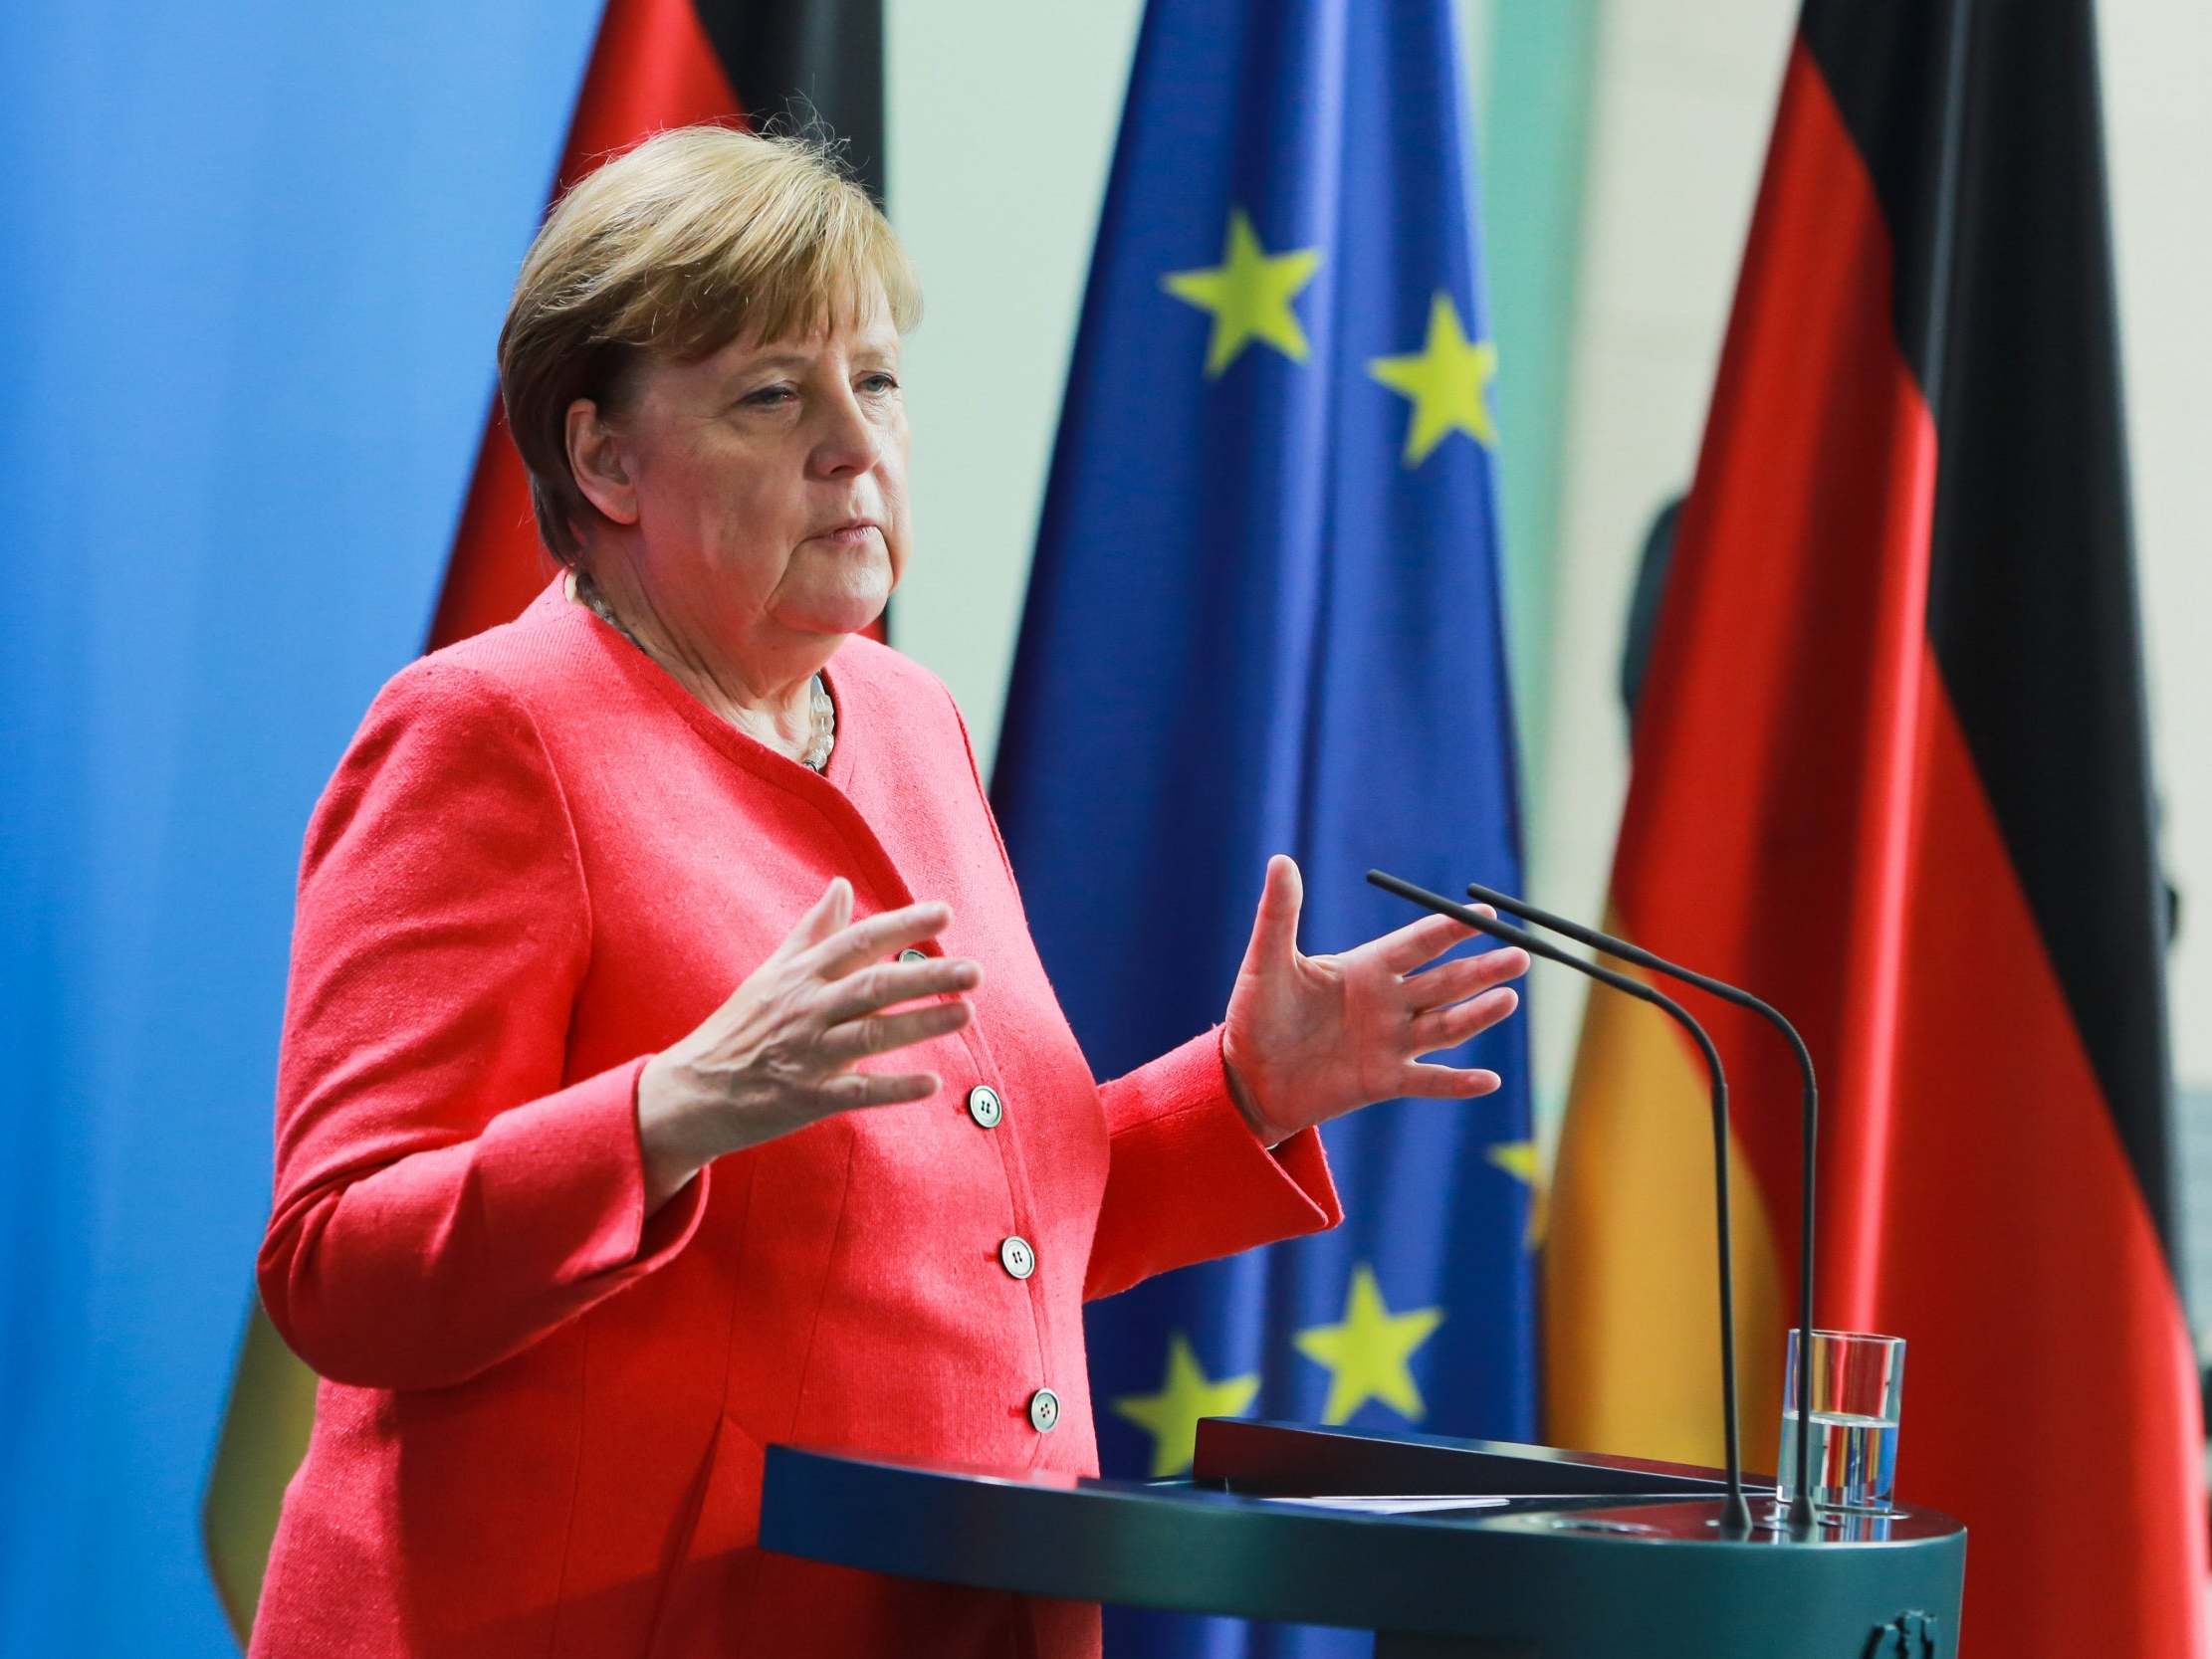 'Risk has not been averted': Angela Merkel issues coronavirus warning as countries reopen